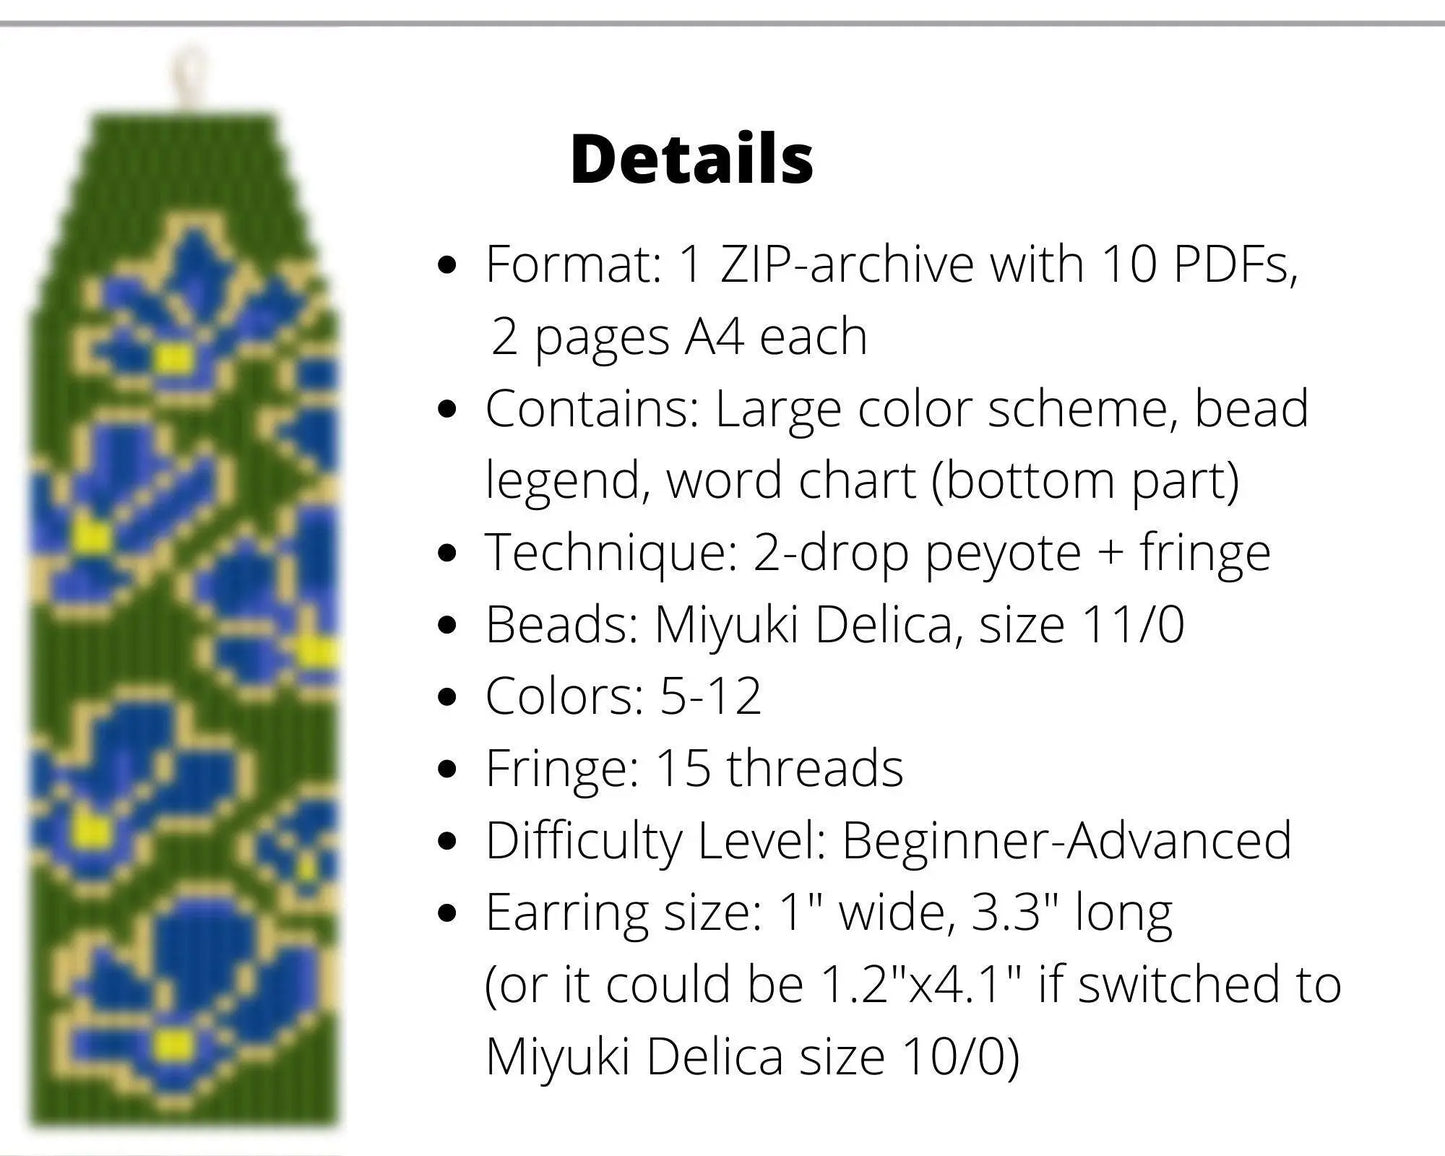 Set of 10 Earrings Brick Stitch patterns for fringe beaded earrings, flowers and butterflies pack for Miyuki Delica - NikoBeadsUA